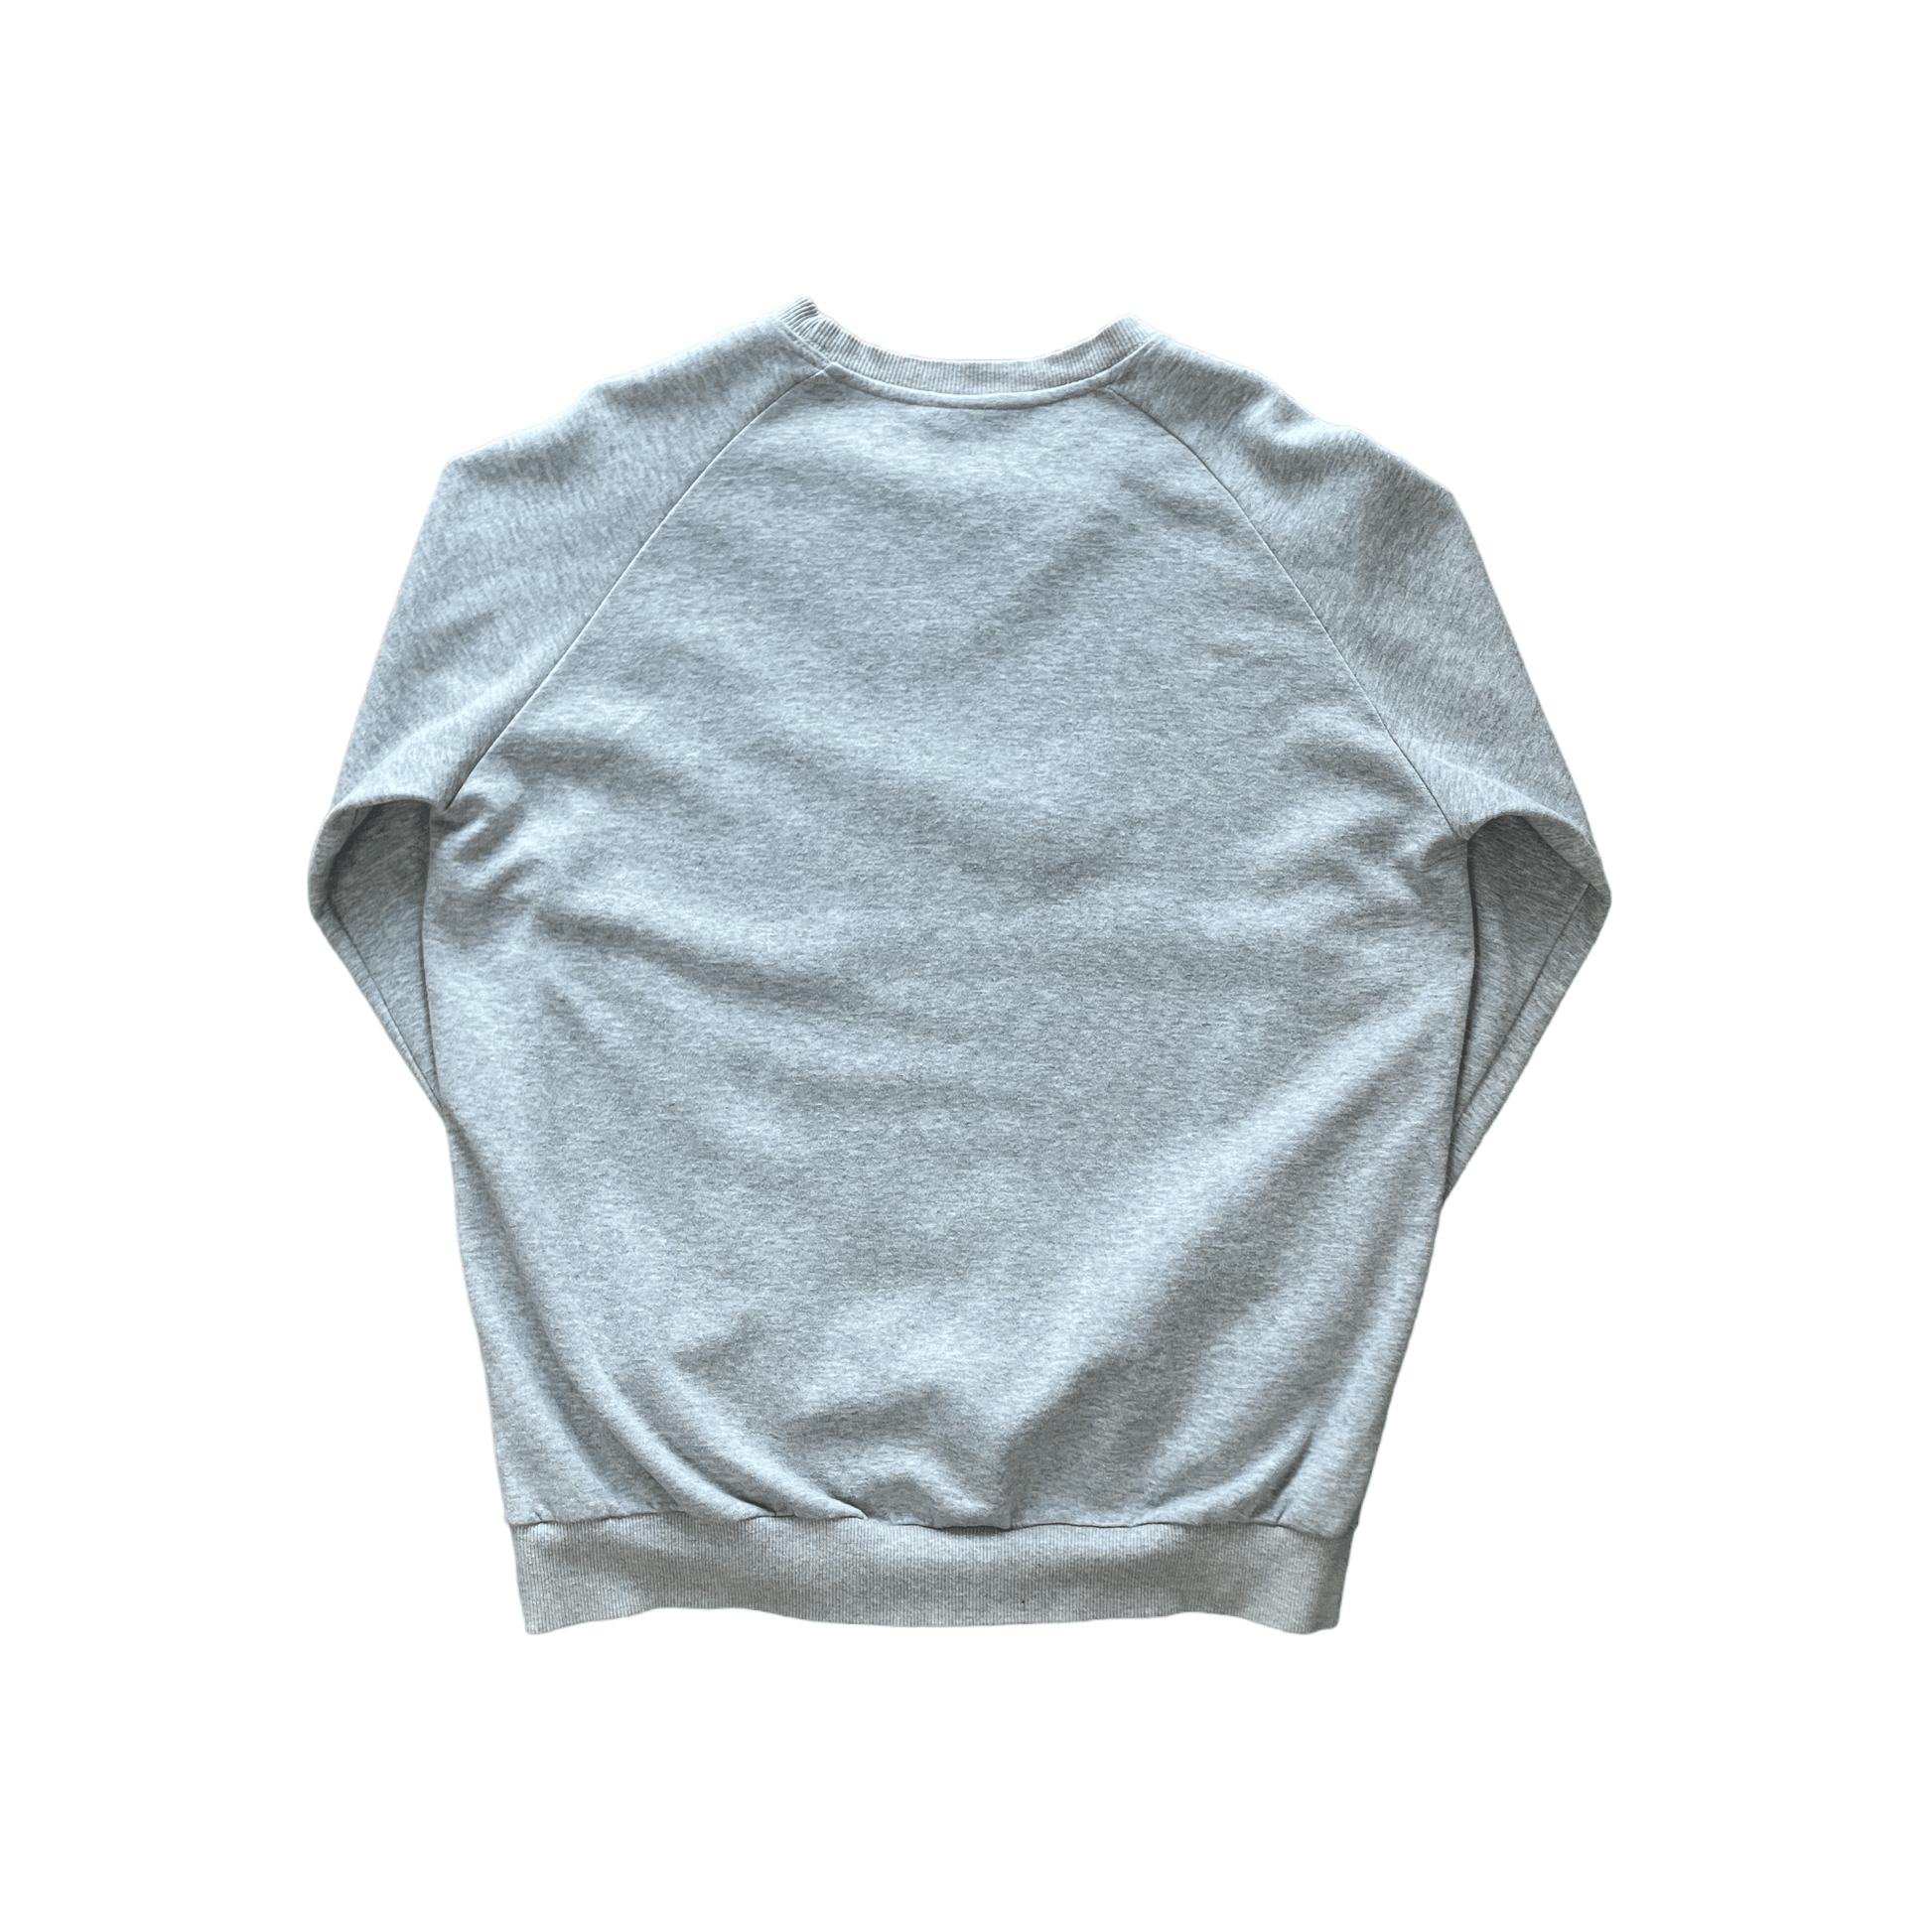 Women’s Vintage Grey Nike Sweatshirt - Large - The Streetwear Studio